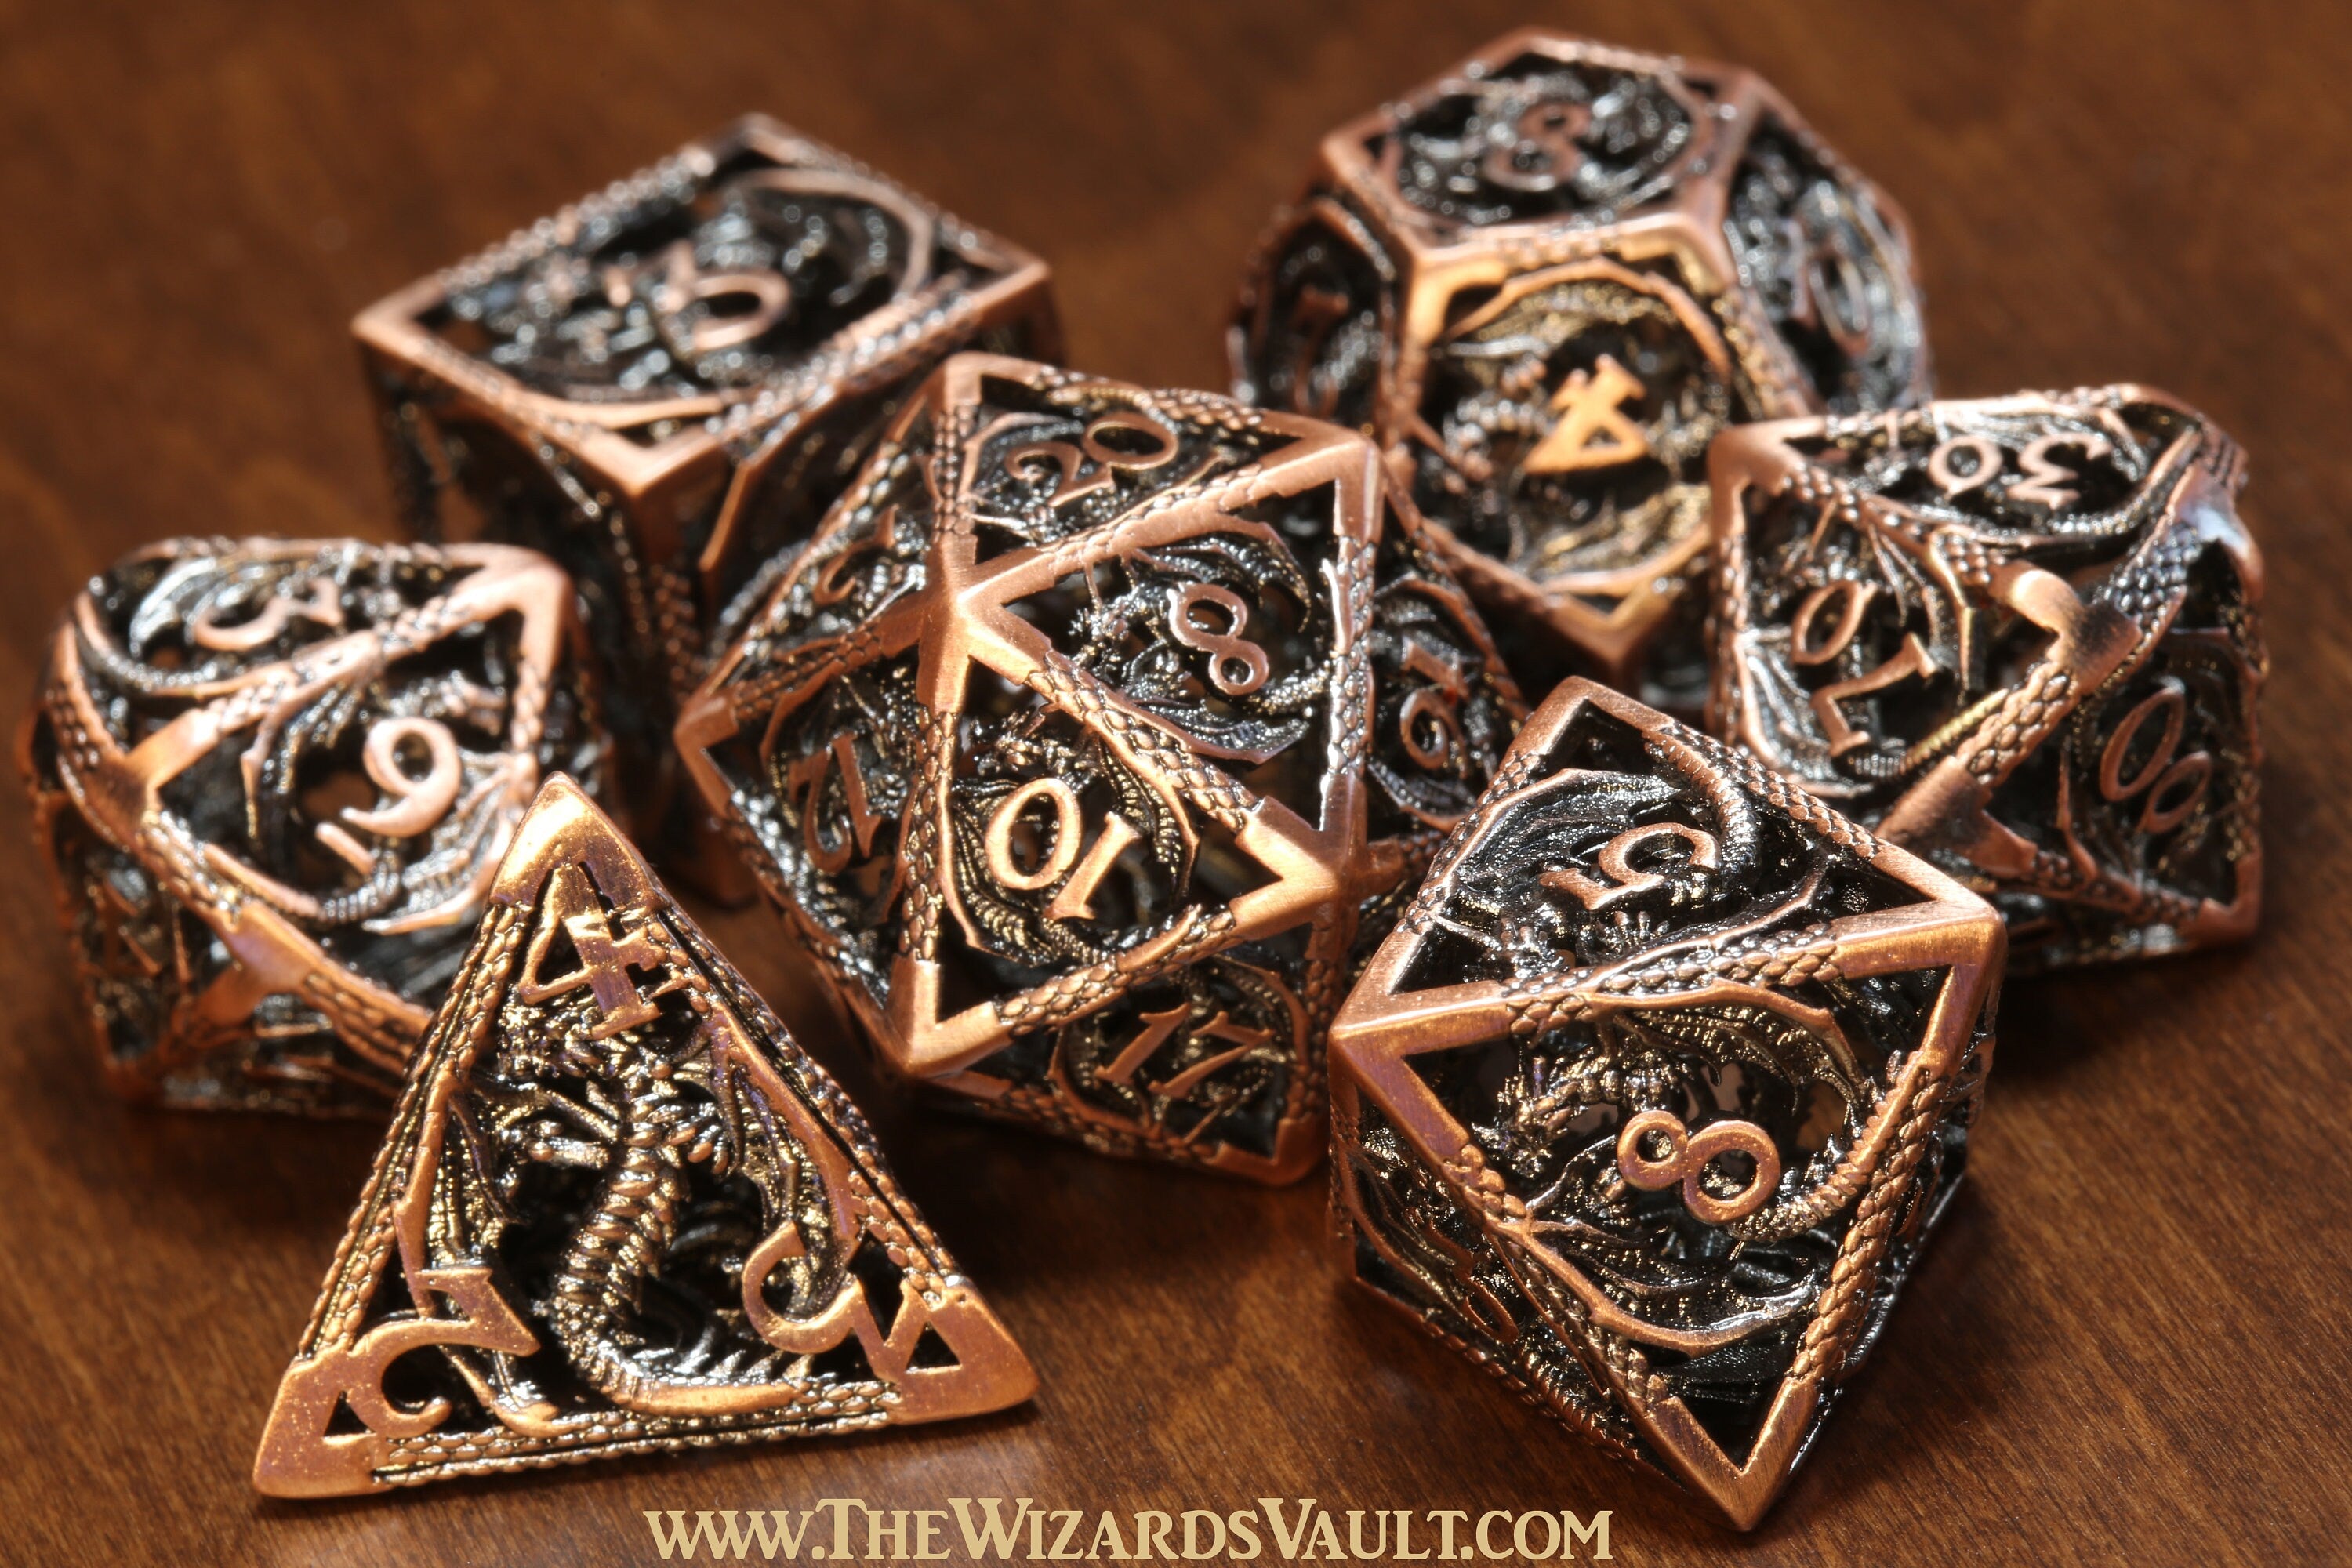 Metallic Dragon Dice Set - Hollow antique metal dice with dragon patterns - The Wizard's Vault